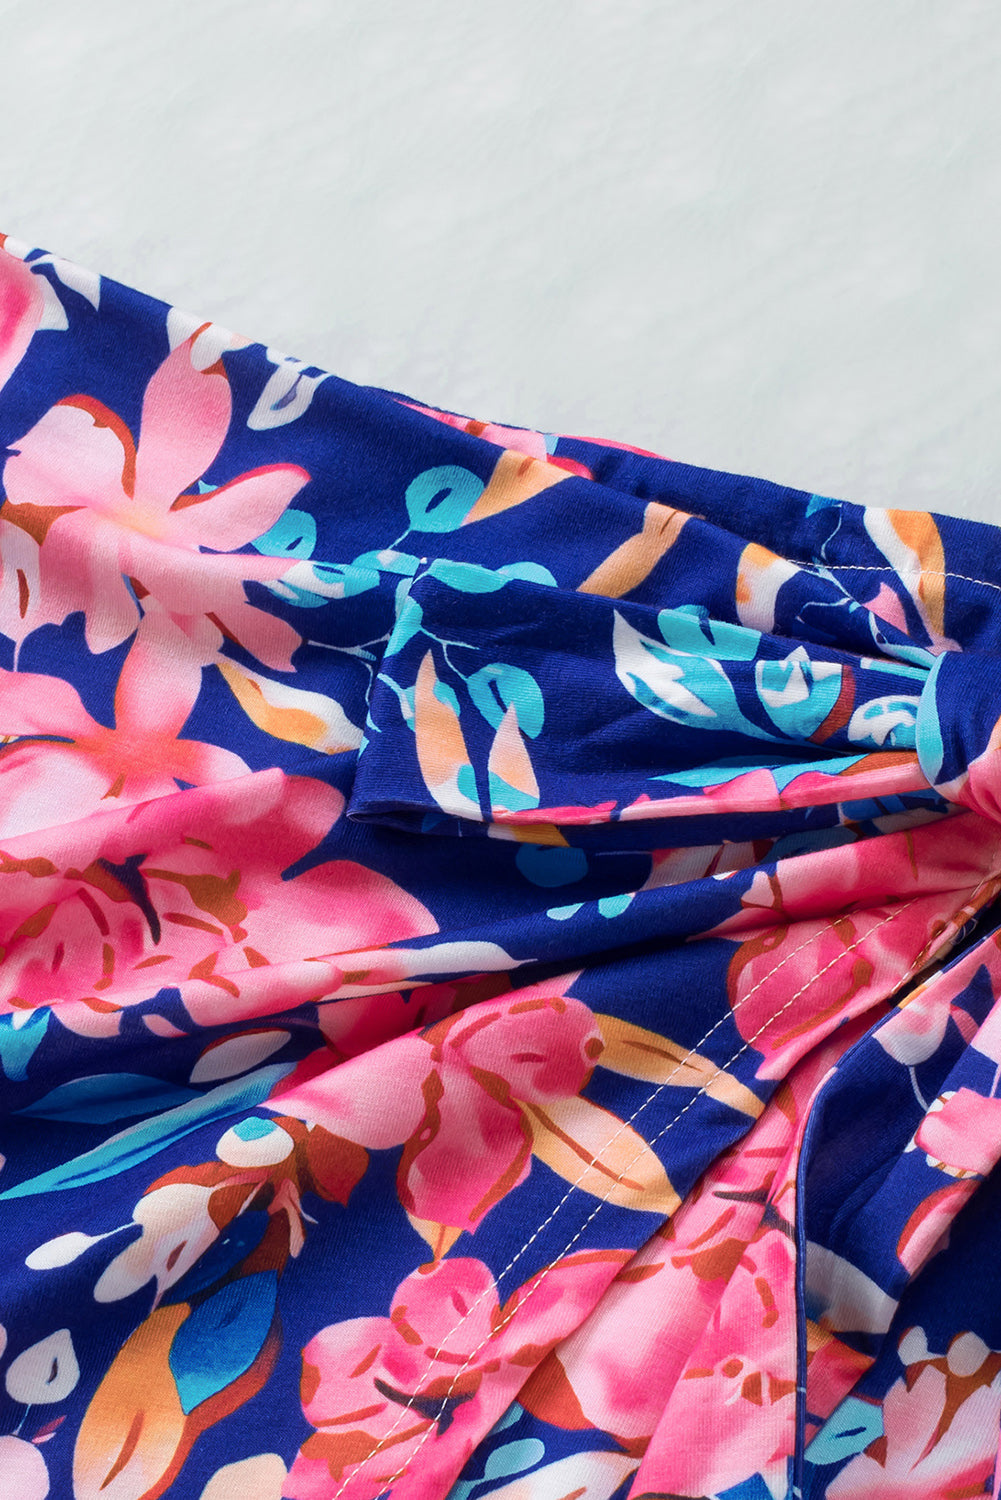 Blue Floral Print Lace-up High Waist Bodycon Mini Skirt